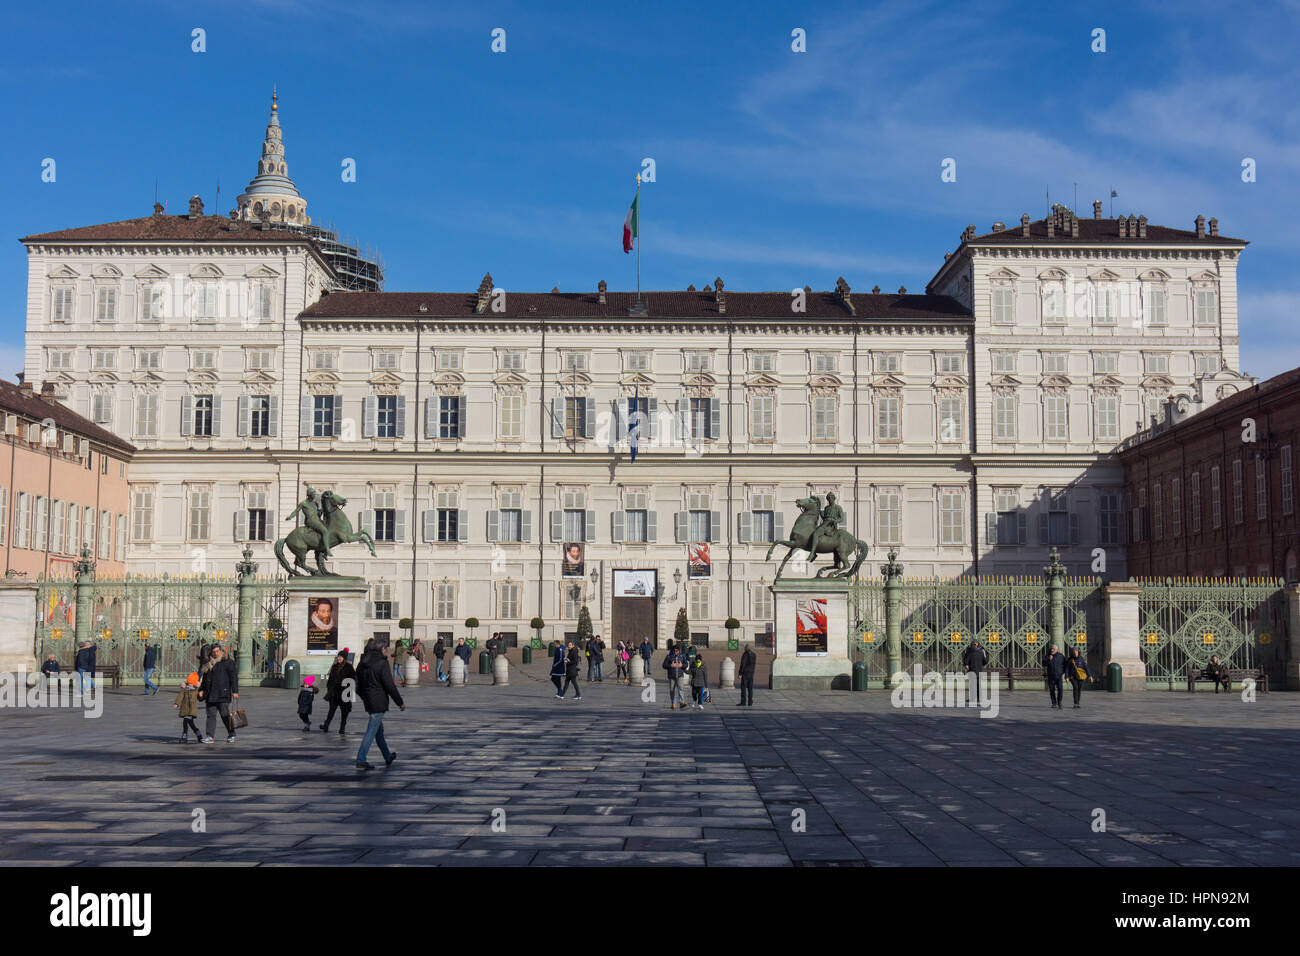 Royal Palace von Turin, der Palazzo Reale di Torino, in der Piazzetta Reale, Turin, Norditalien Stockfoto